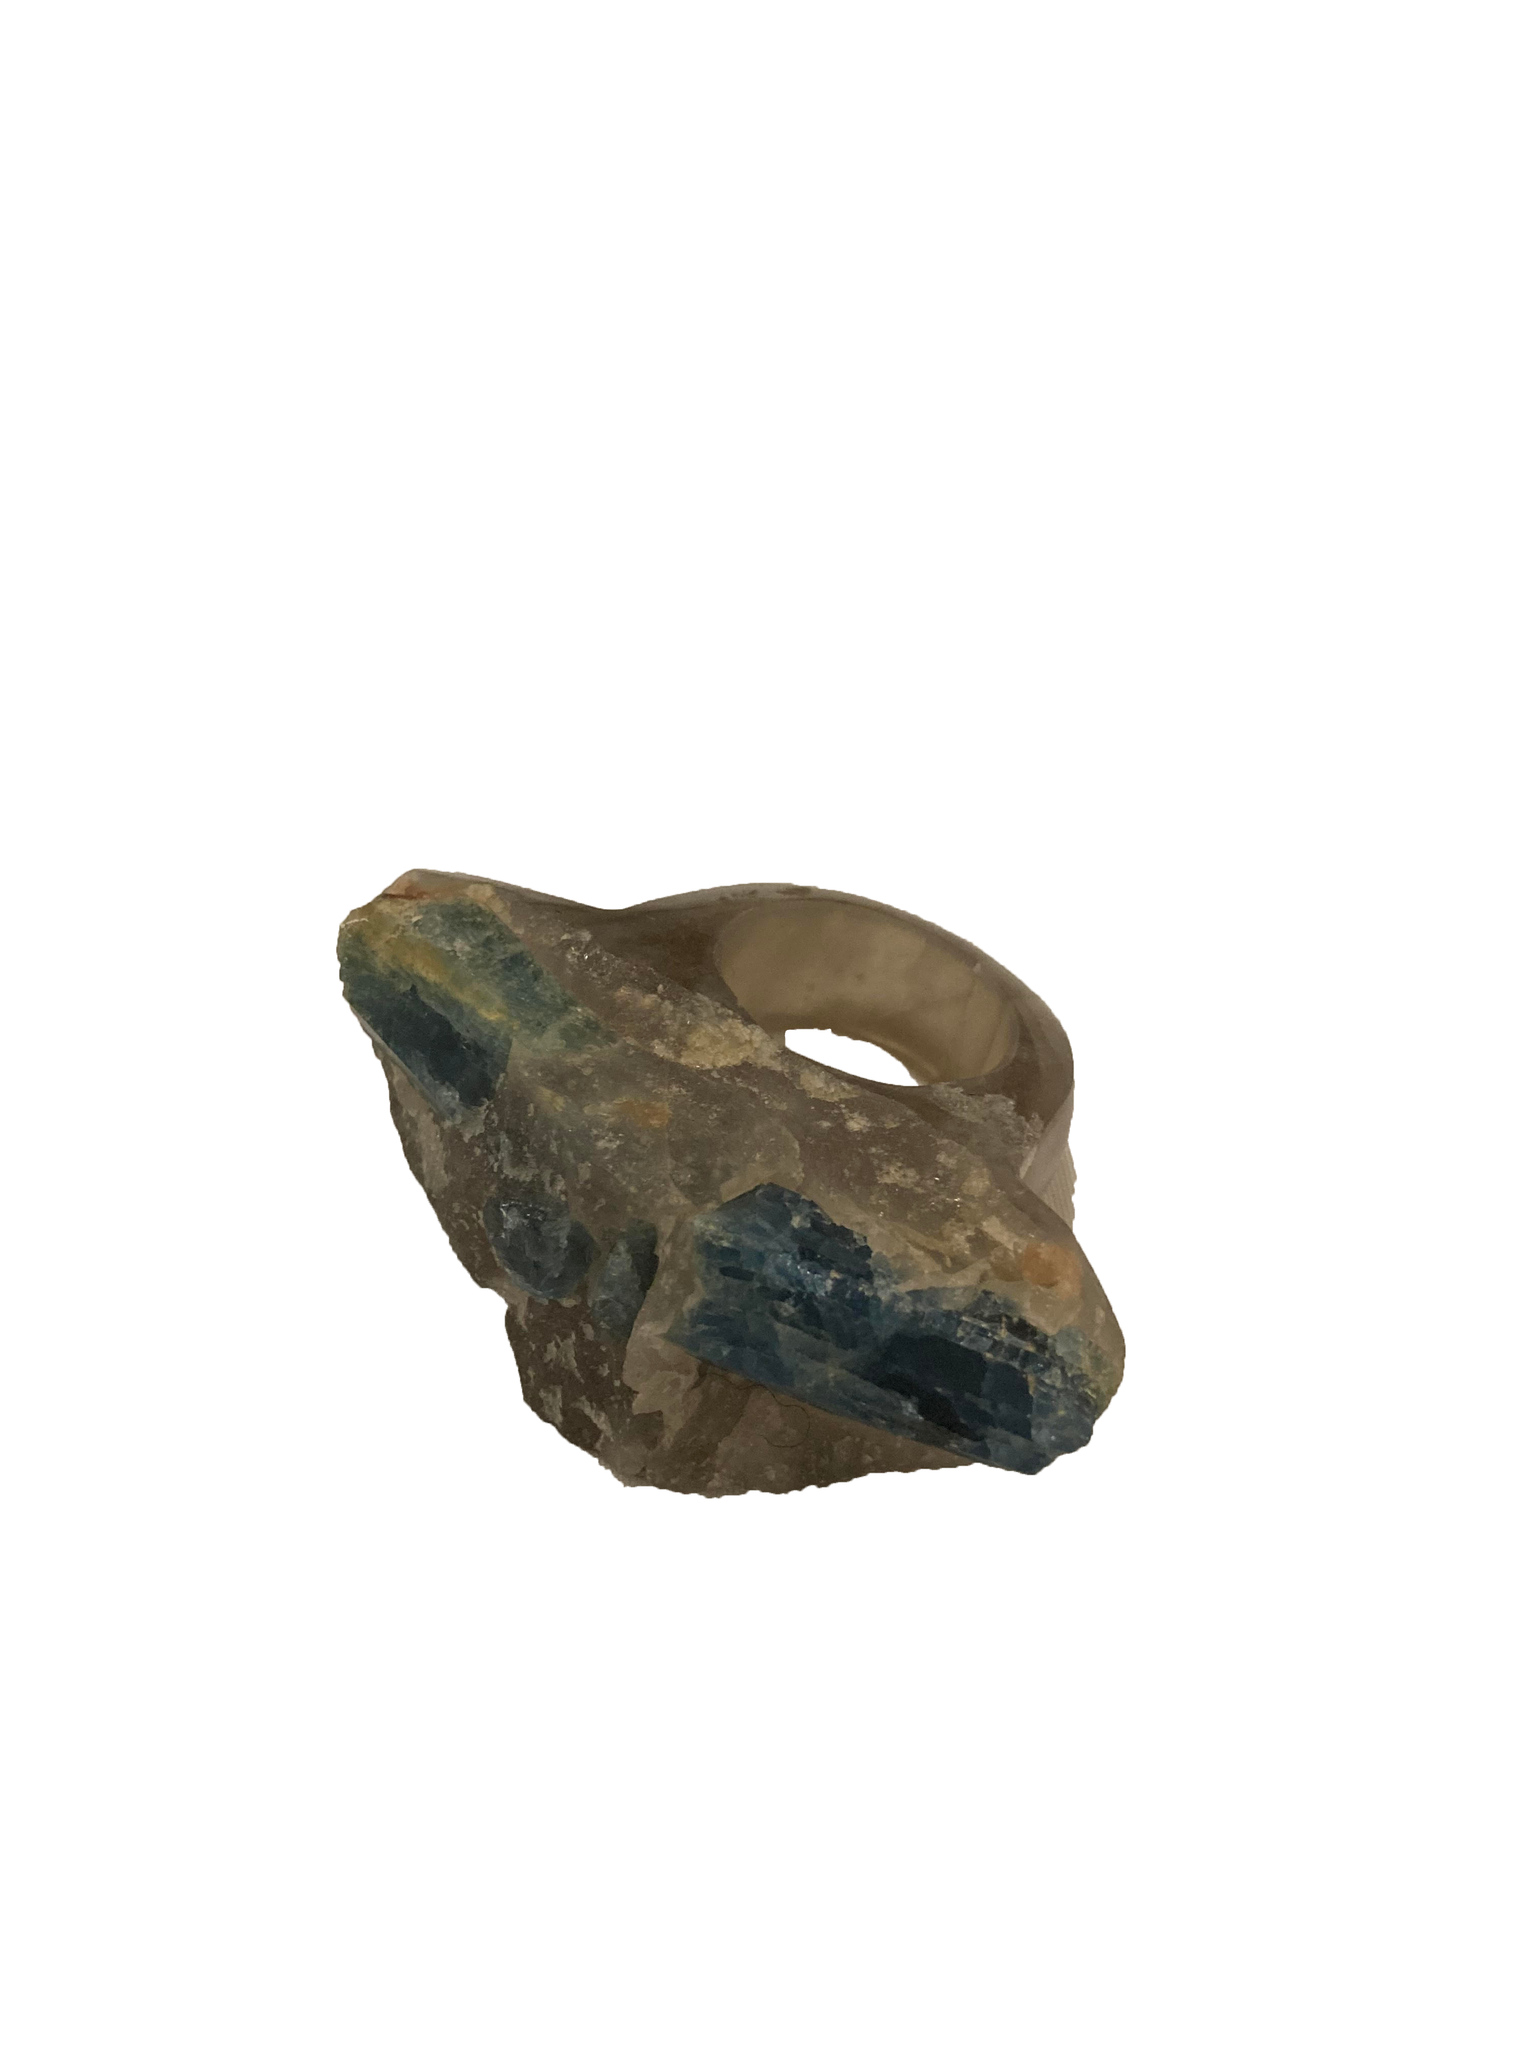 Crystal Ring